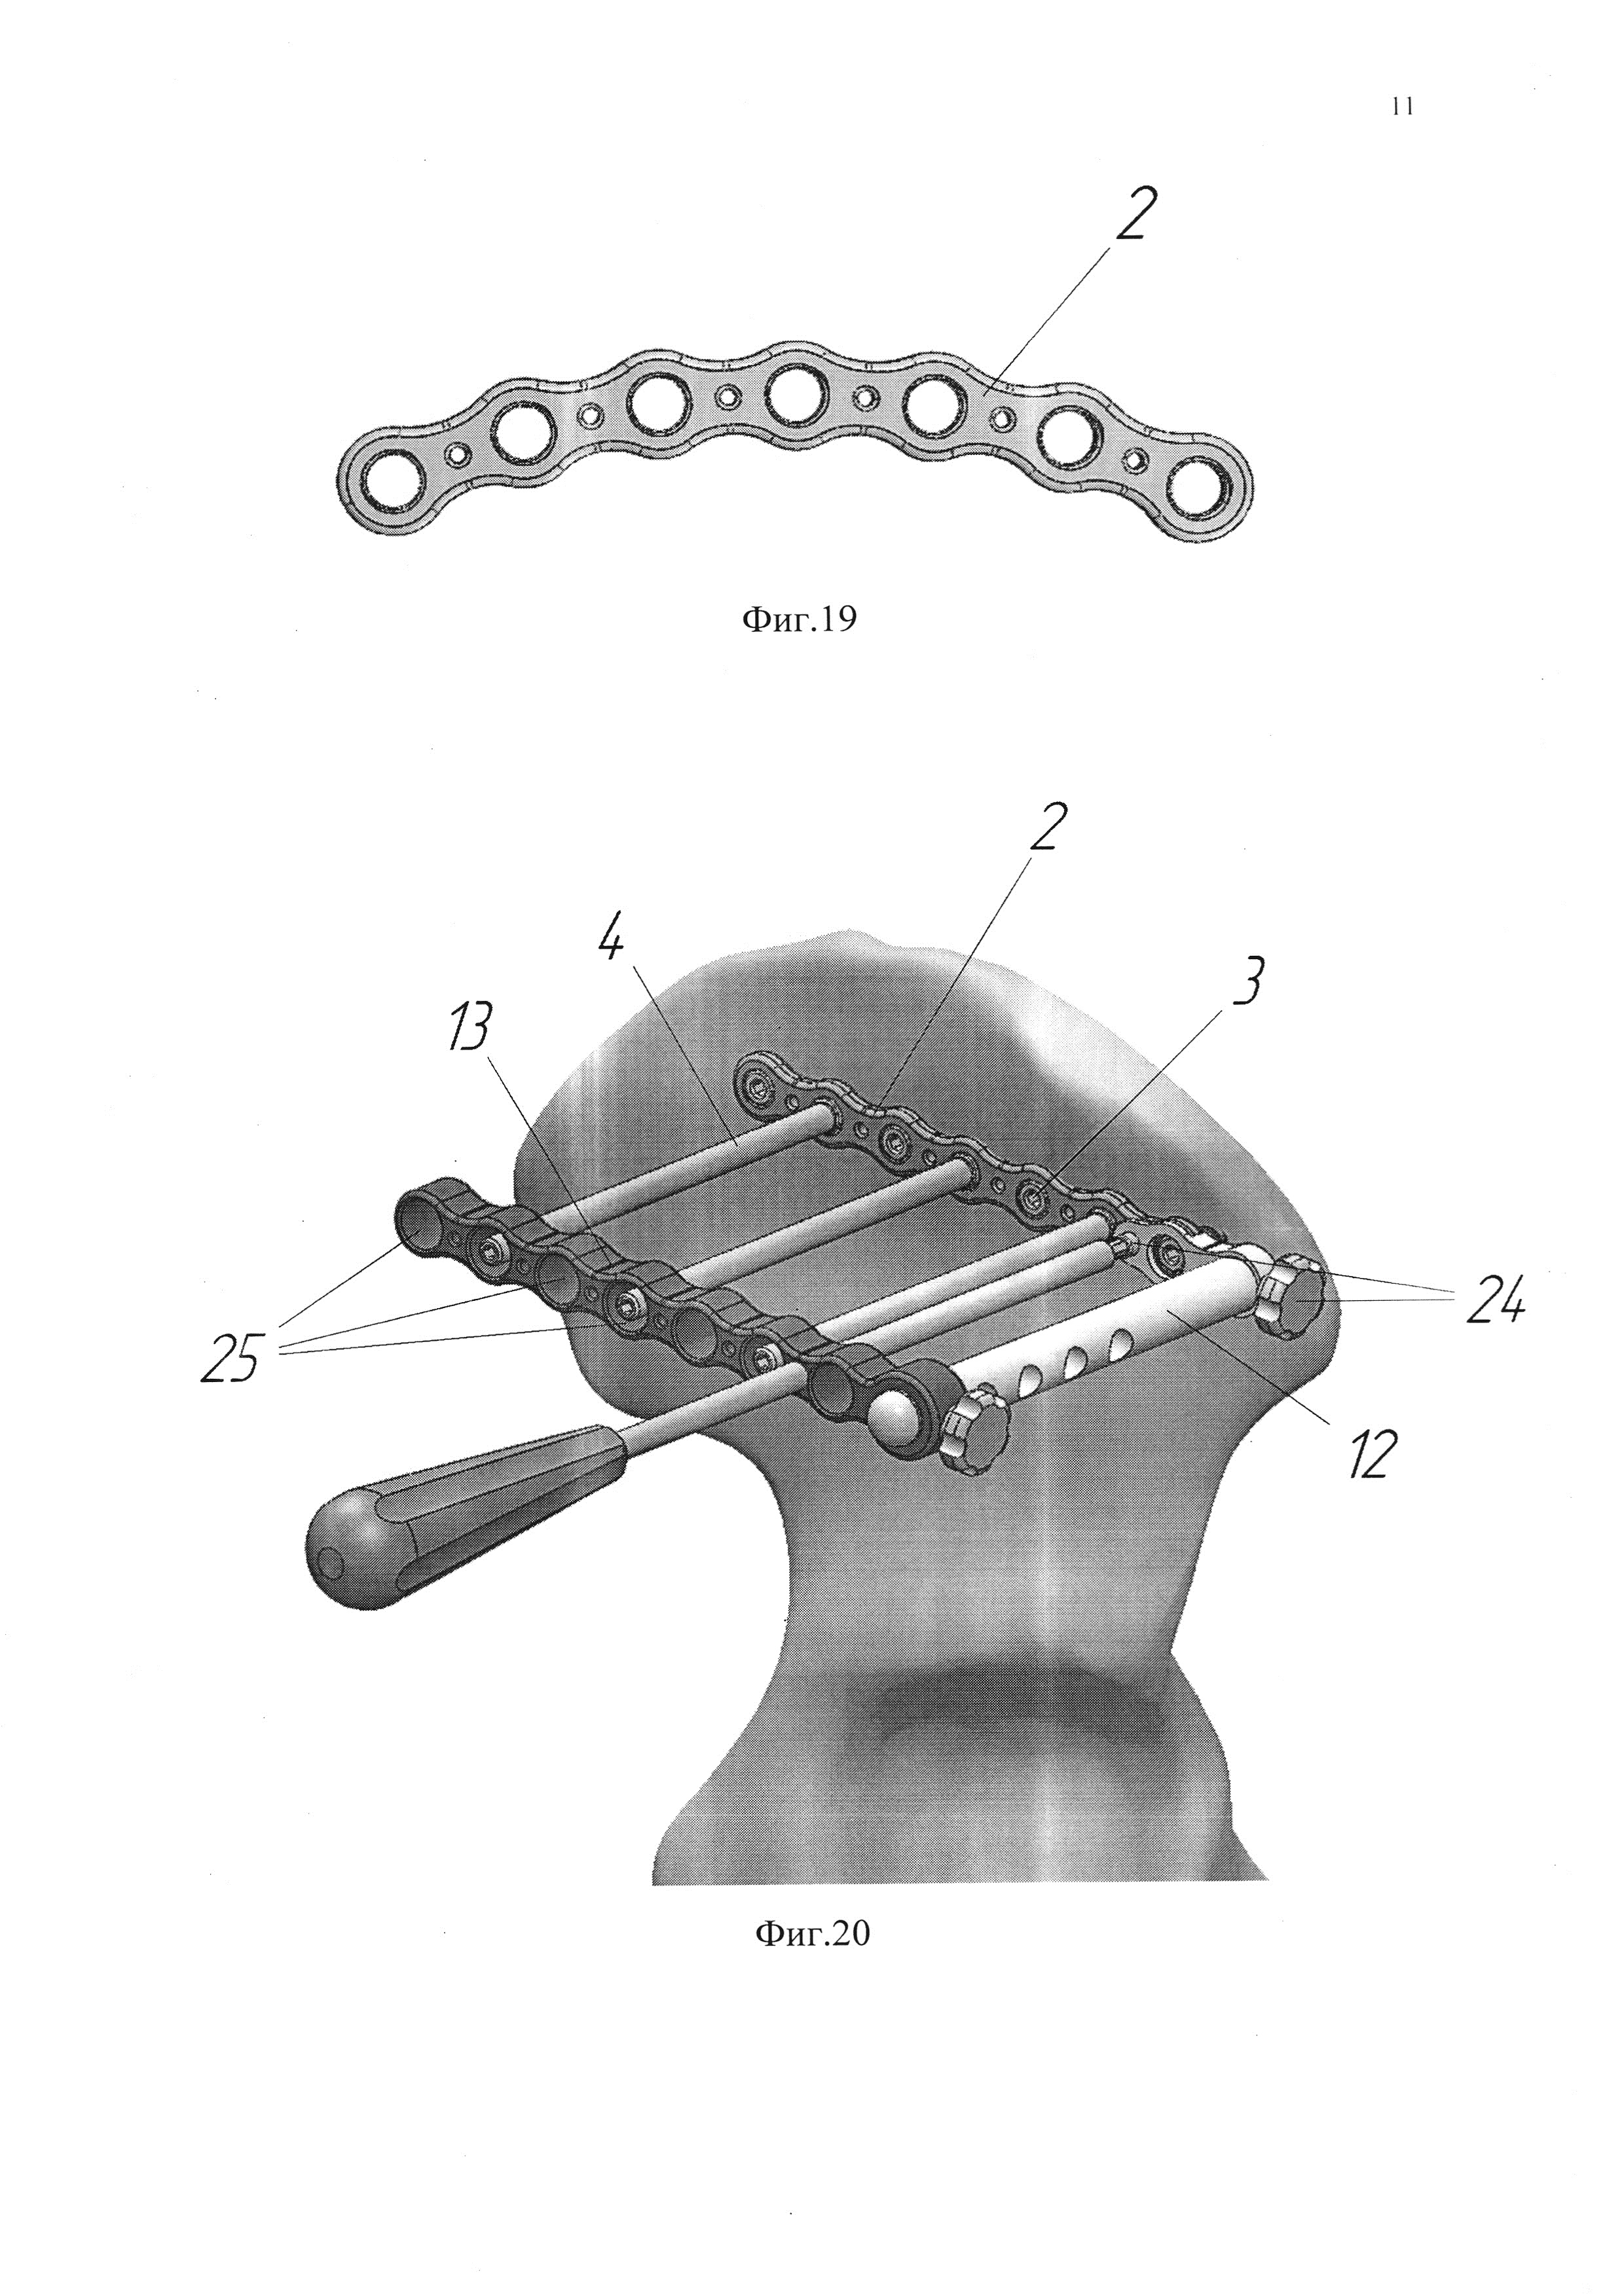 RU2288657C2 - Способ лечения гипопластического коксартроза - Google Patents